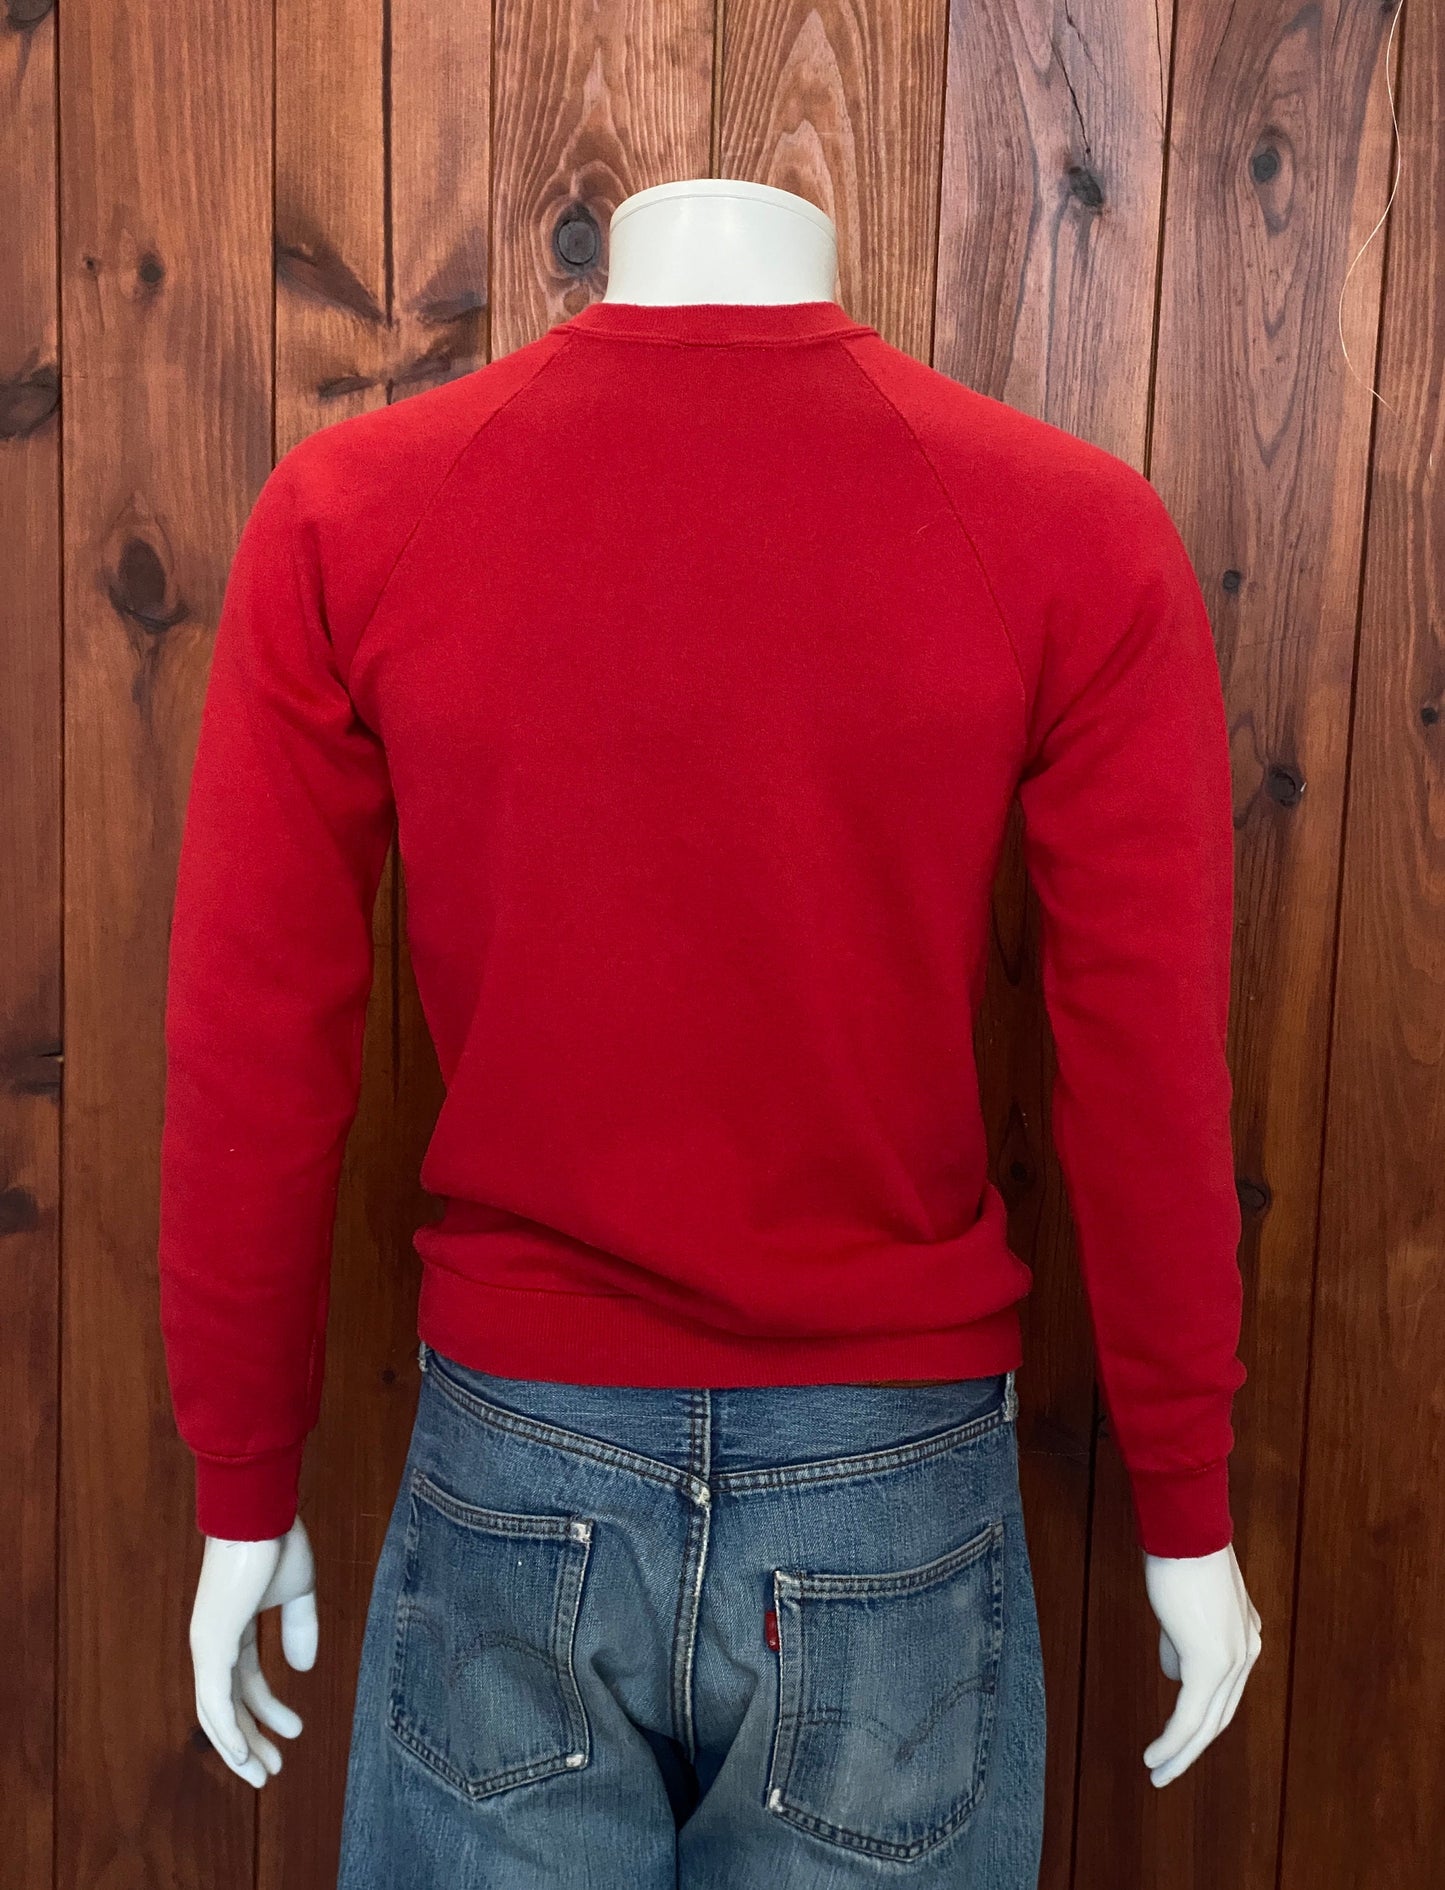 Medium 80s Vintage Red Raiders Sweatshirt Made In USA | Retro Apparel